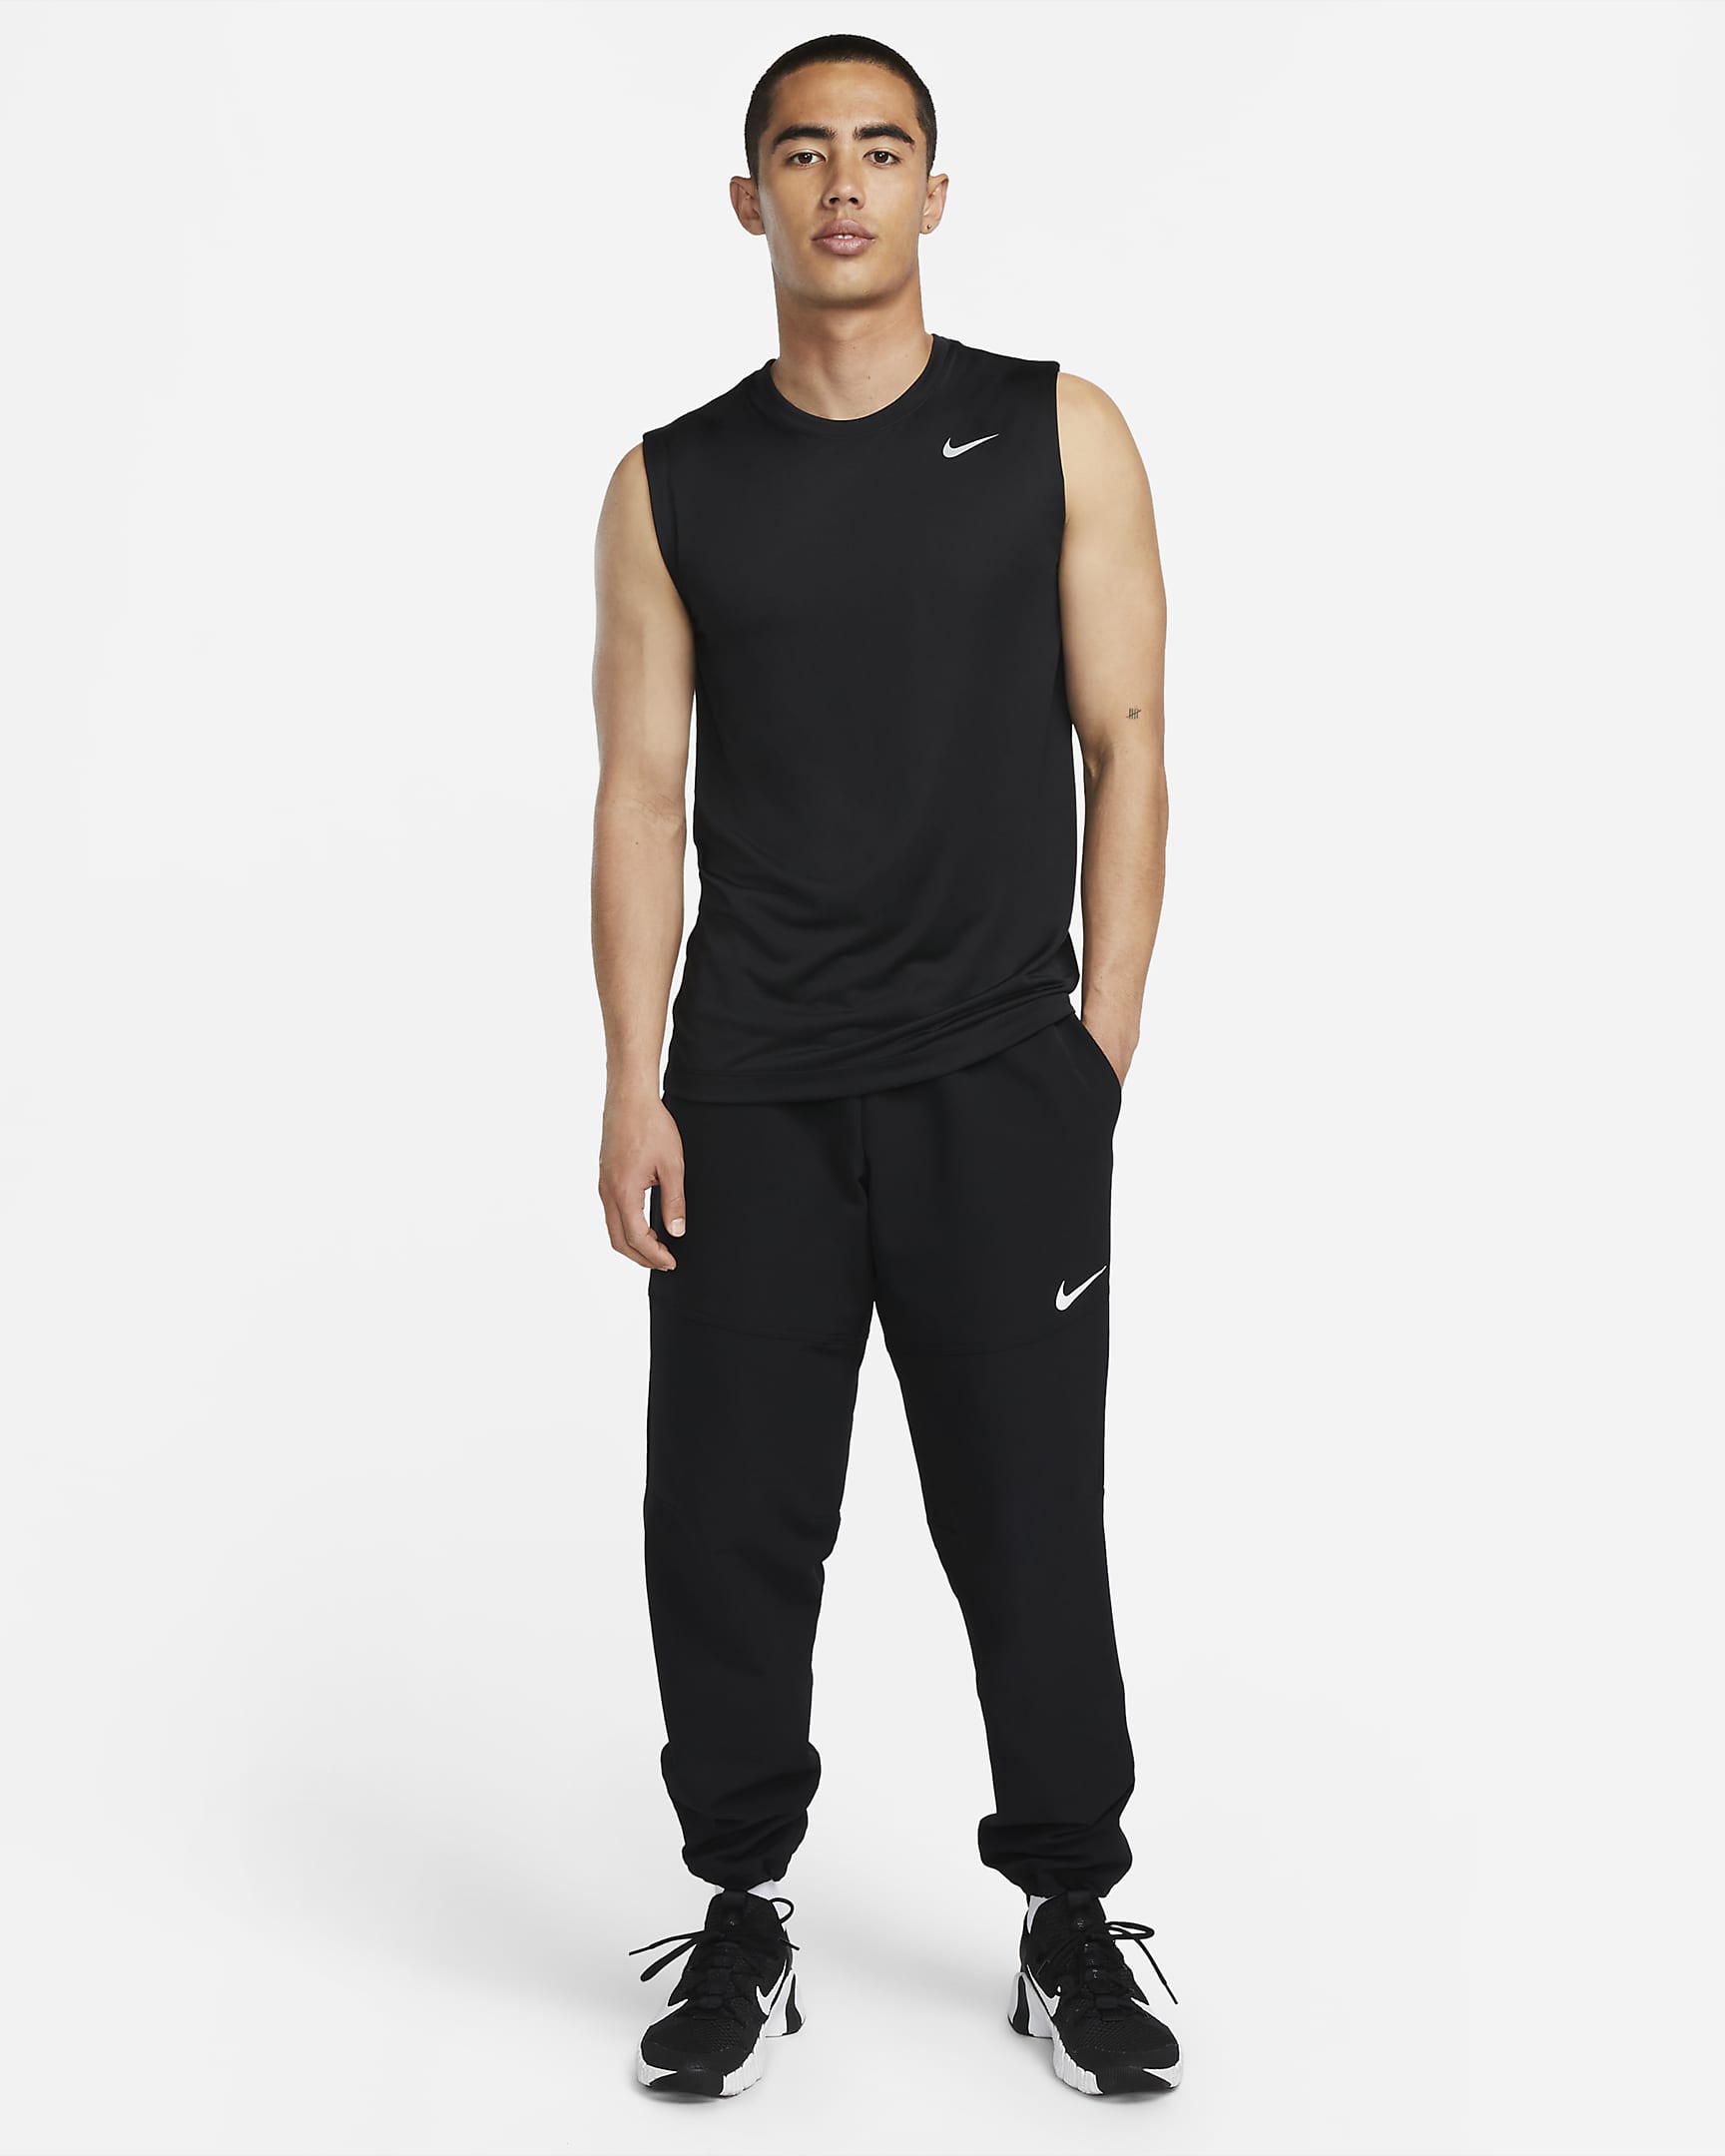 Nike Dri-FIT Legend Men's Sleeveless Fitness T-Shirt - Black/Matte Silver